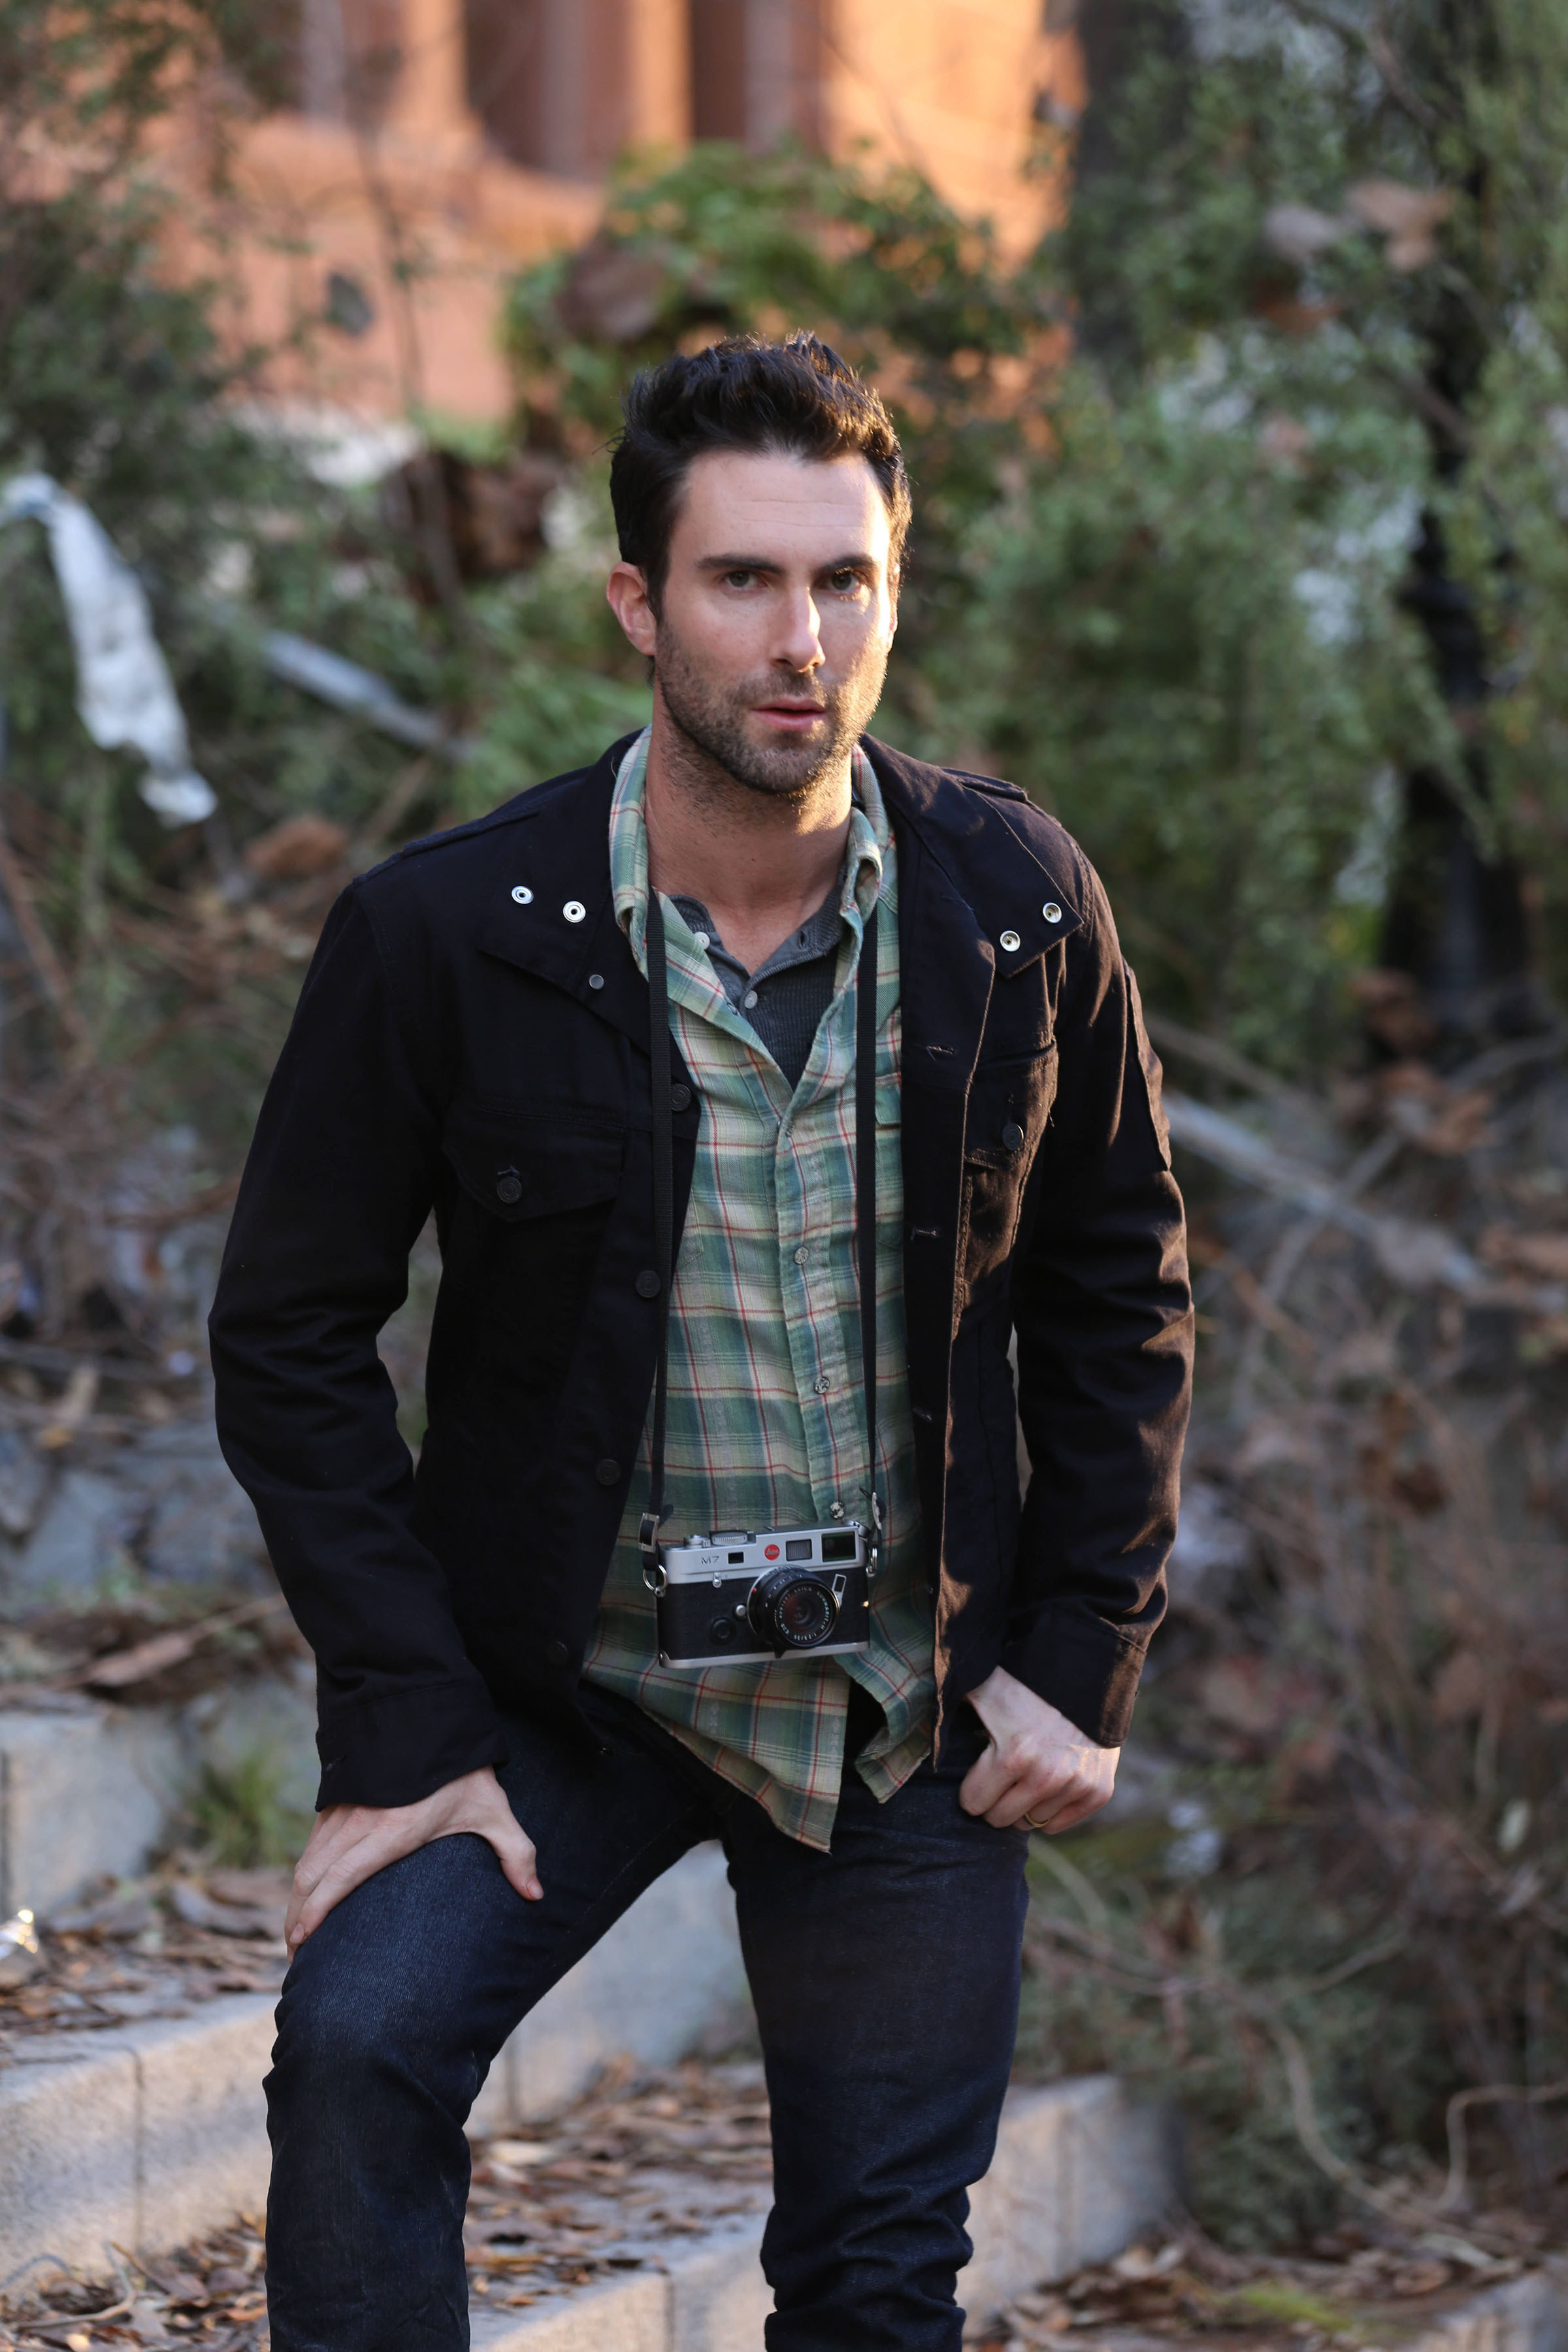 Adam Levine as the tourist, standing outside the decrepit asylum